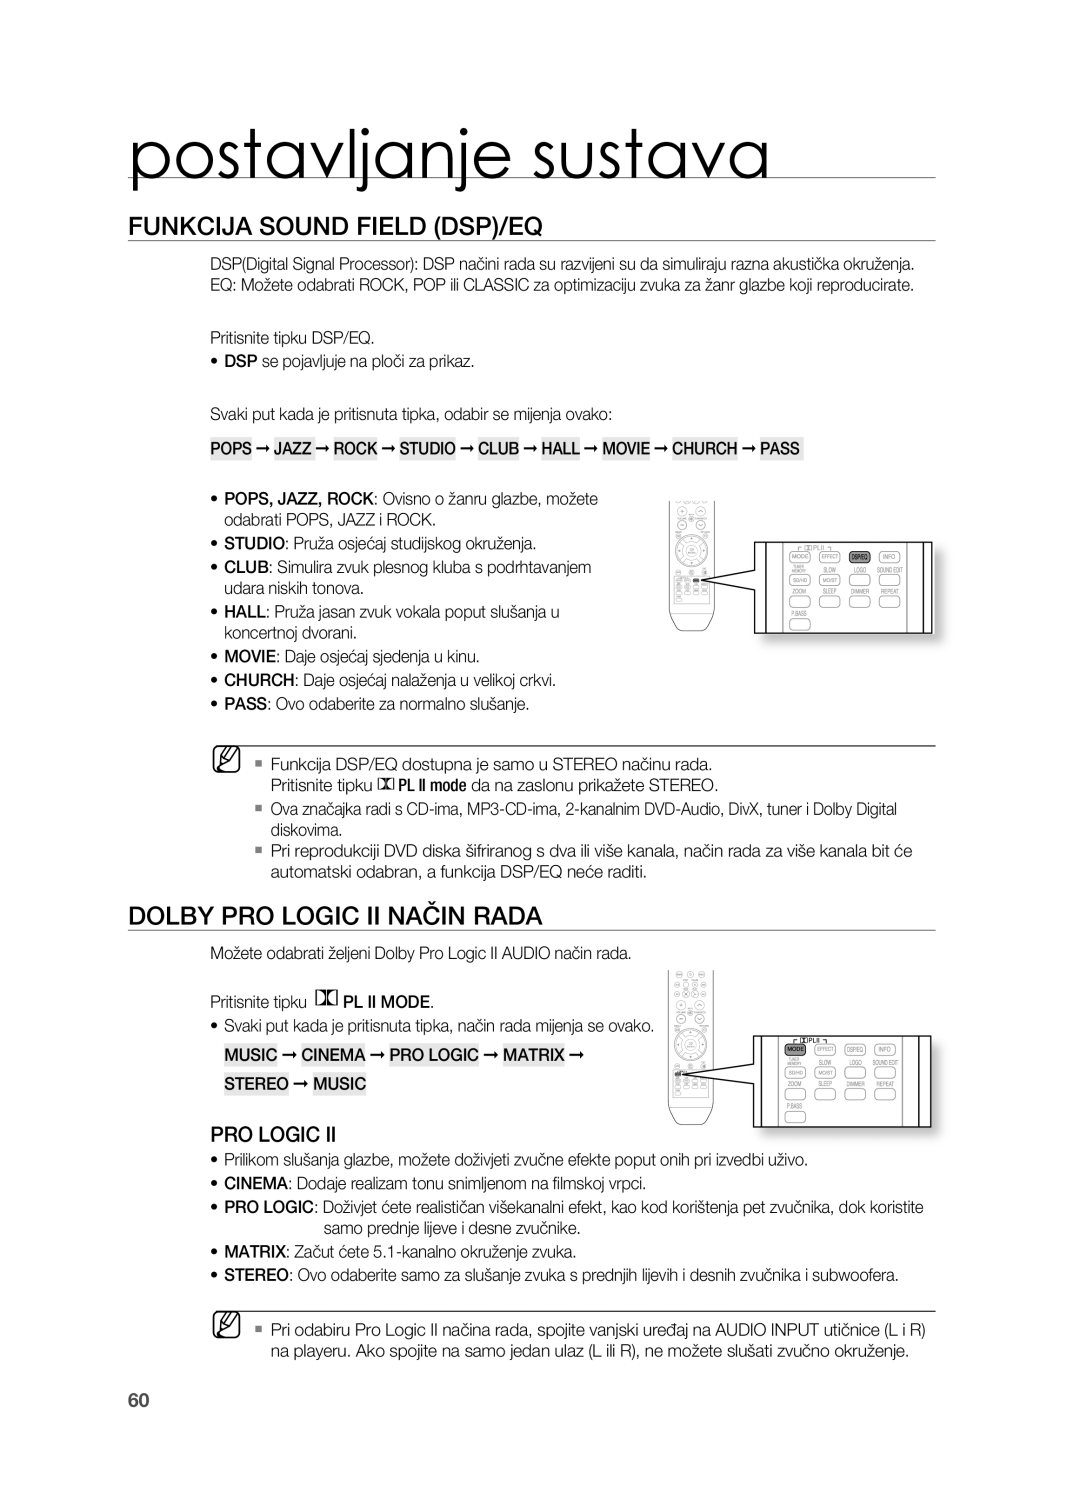 Samsung HT-Z310R/EDC, HT-TZ212R/EDC manual FUNkCIjA SoUND FIELD DSP/EQ, DoLBY PRo LogIC II NAčIN RADA, postavljanje sustava 